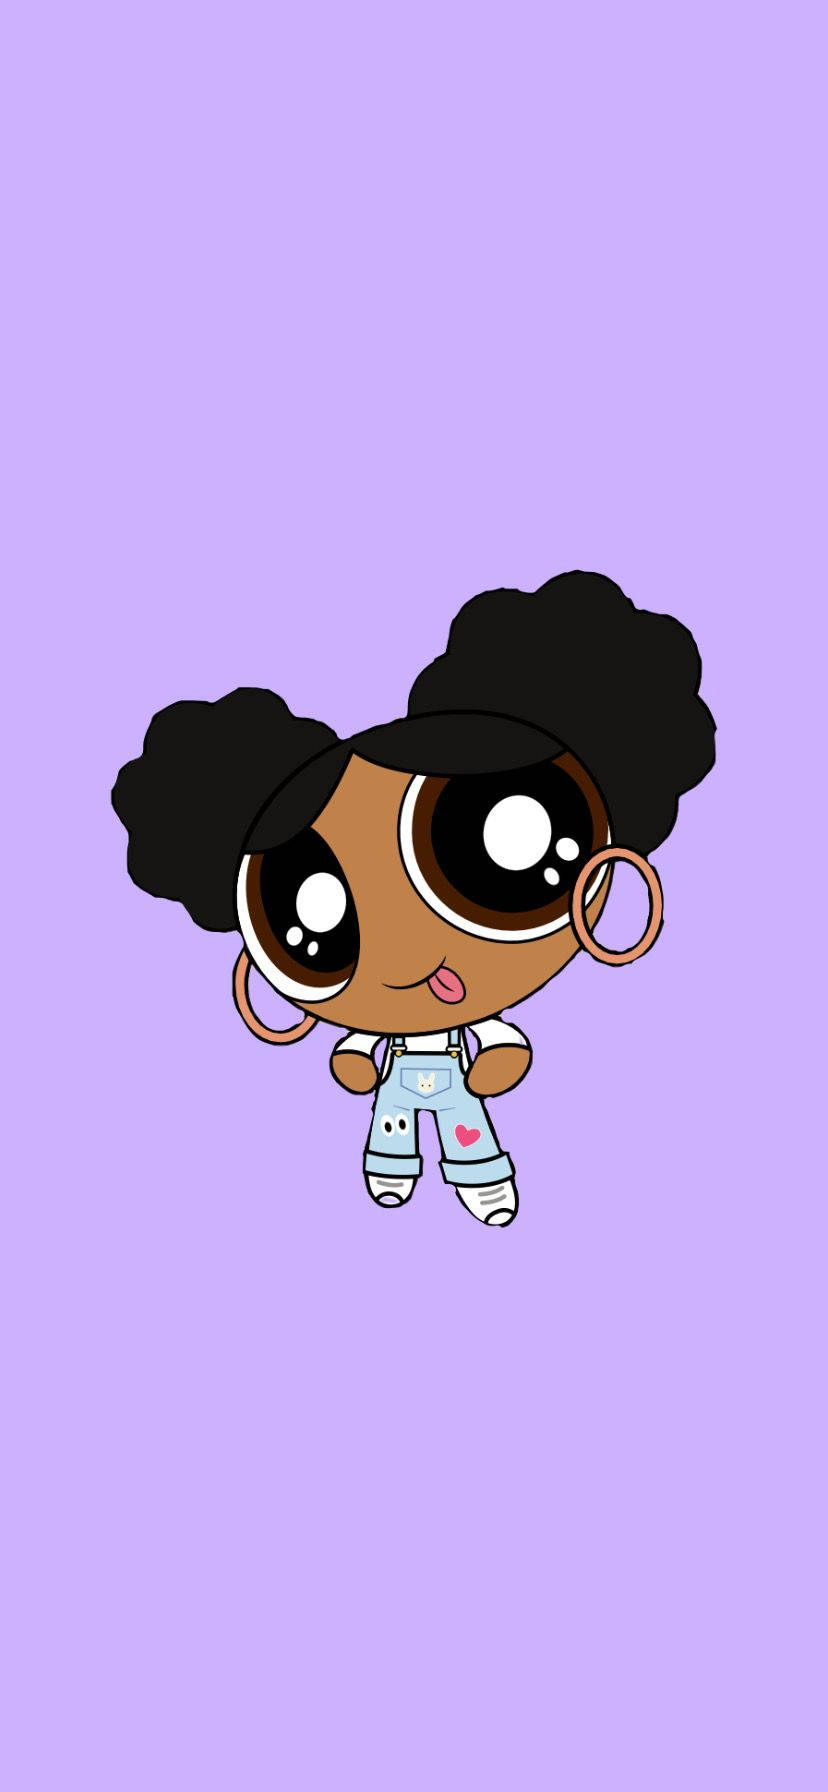 A Joyful Black Girl Cartoon Character Background